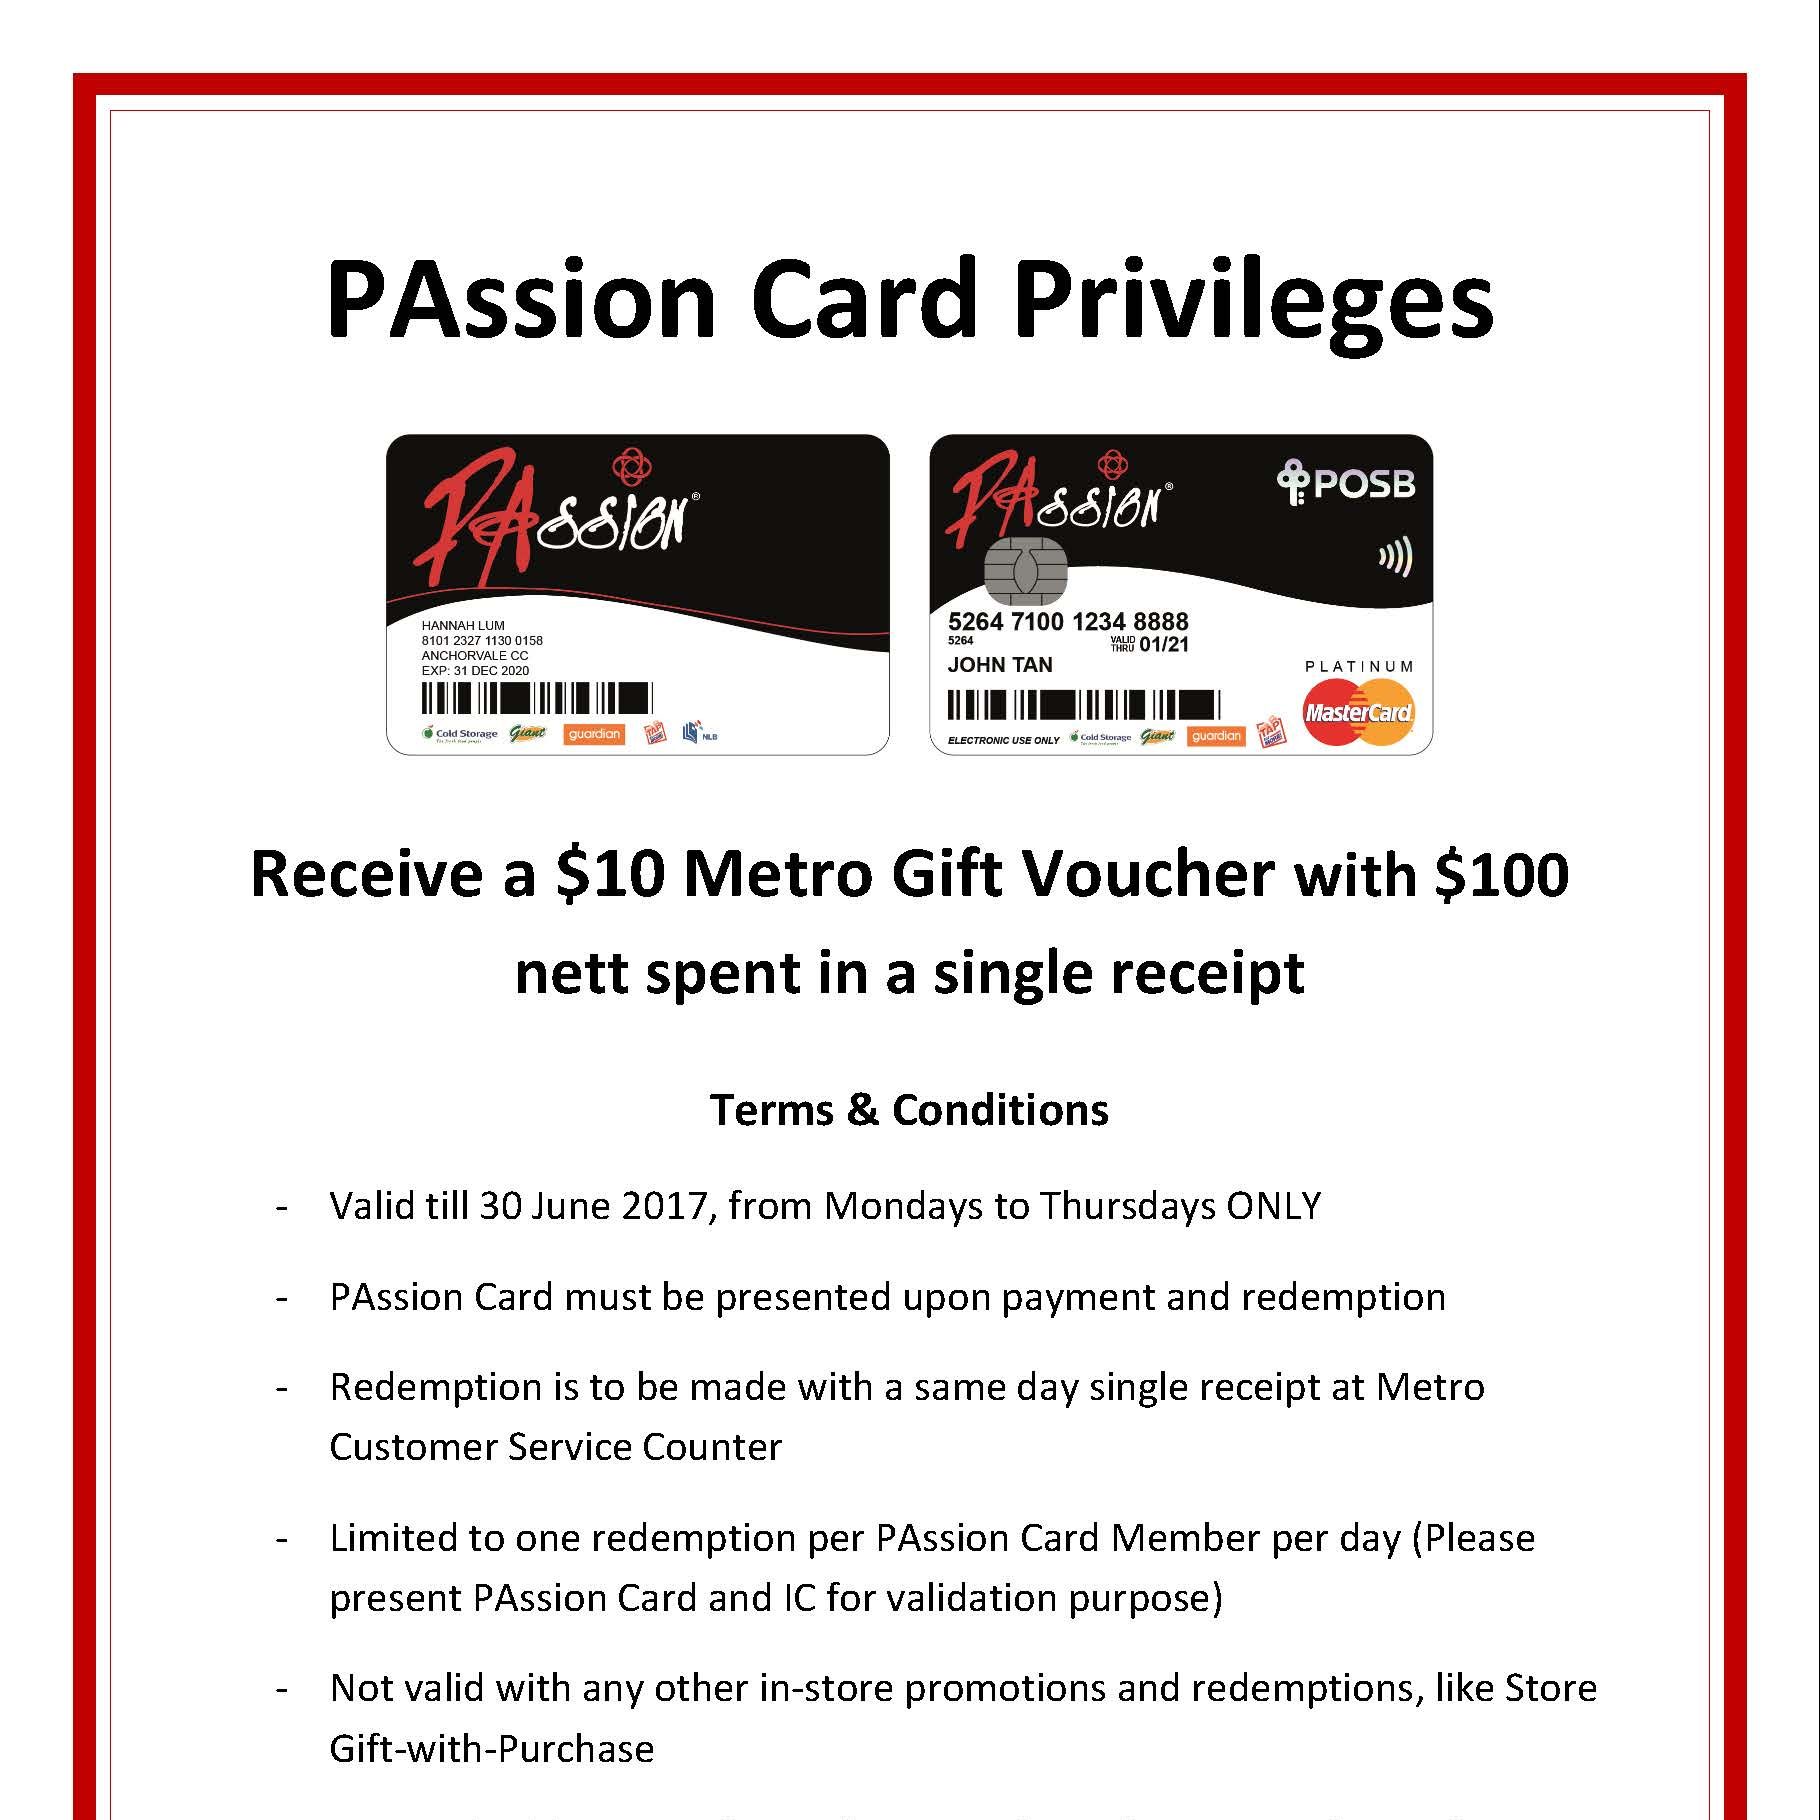 METRO Passion Card Privileges Singapore Promotion ends 30 Jun 2017